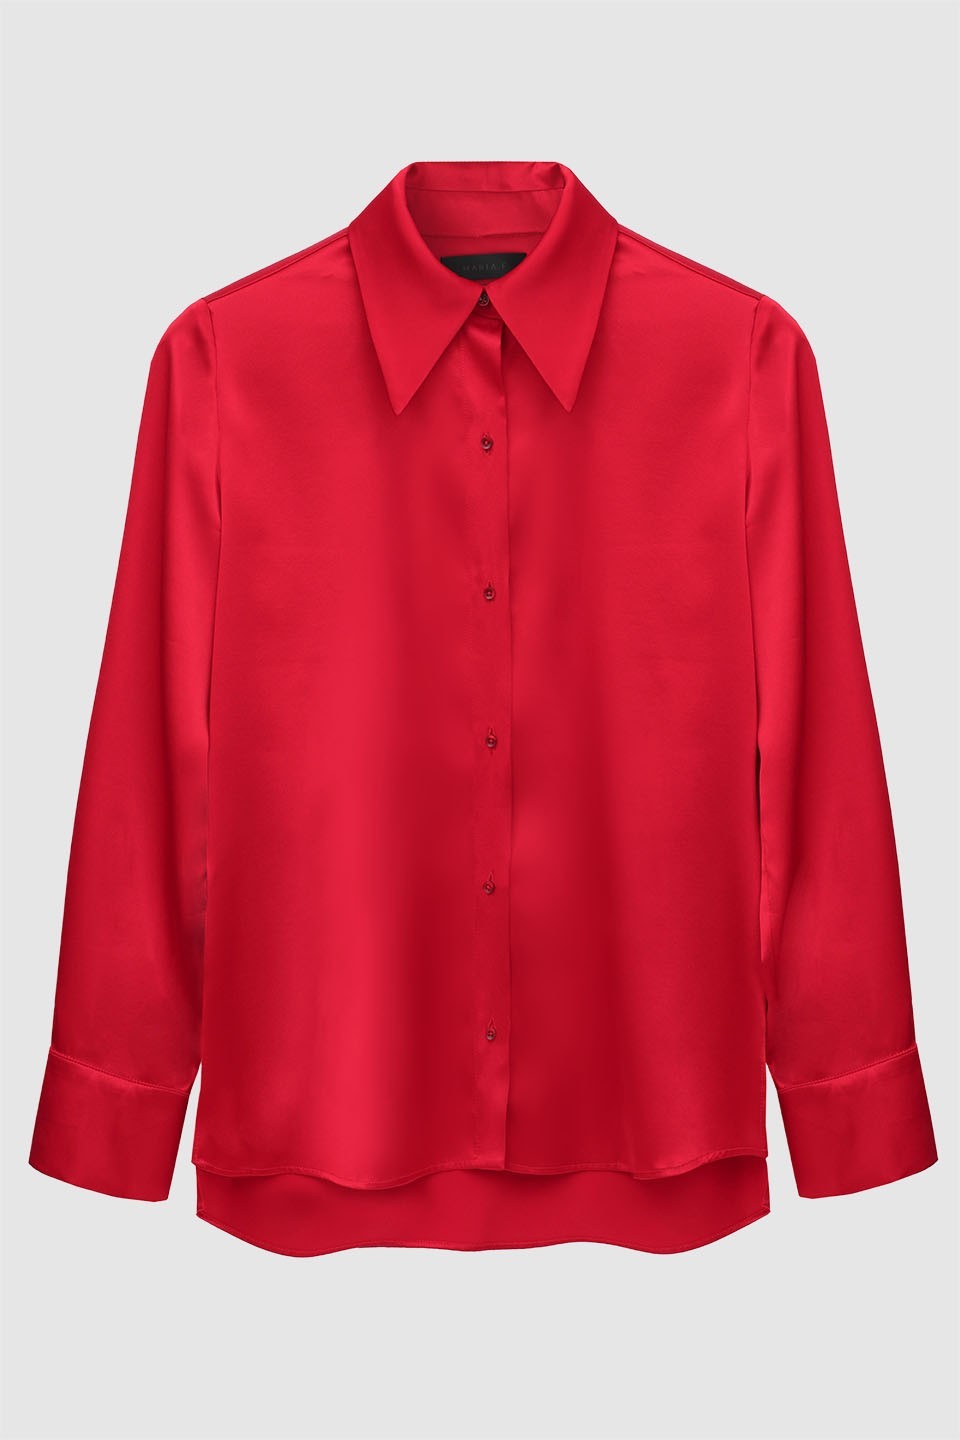 Satin red shirt